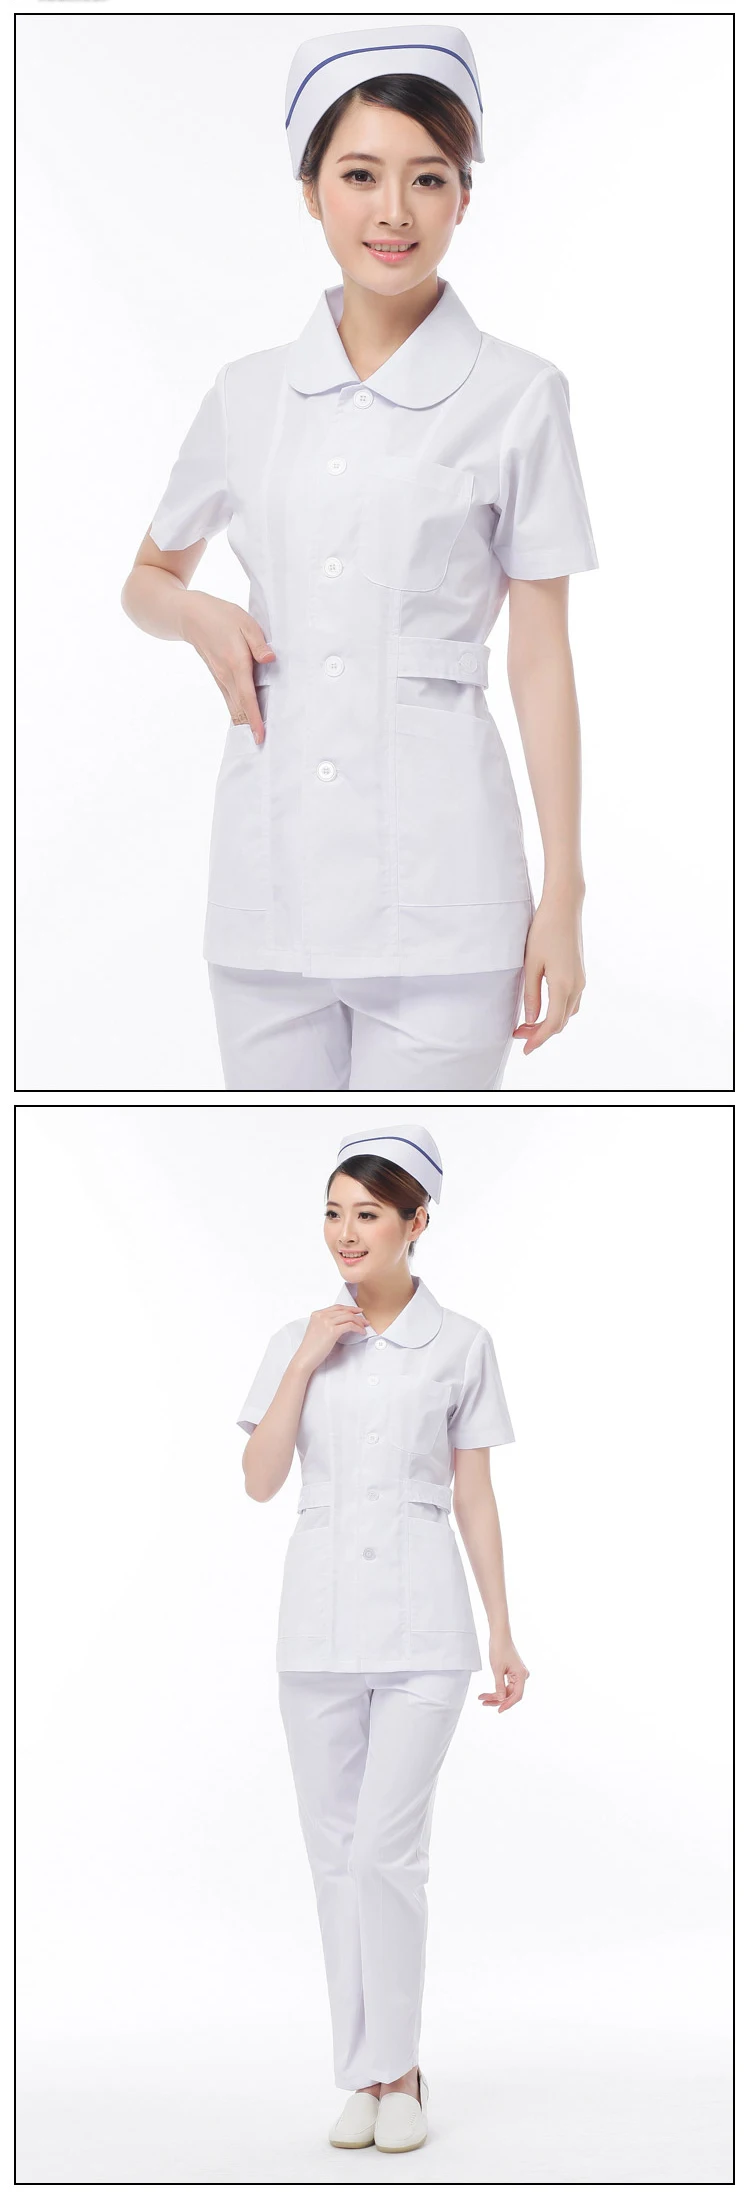 Female White Nurse Uniform Short Sleeves Cotton Fabric Medical Uniform Top And Pants Hospital